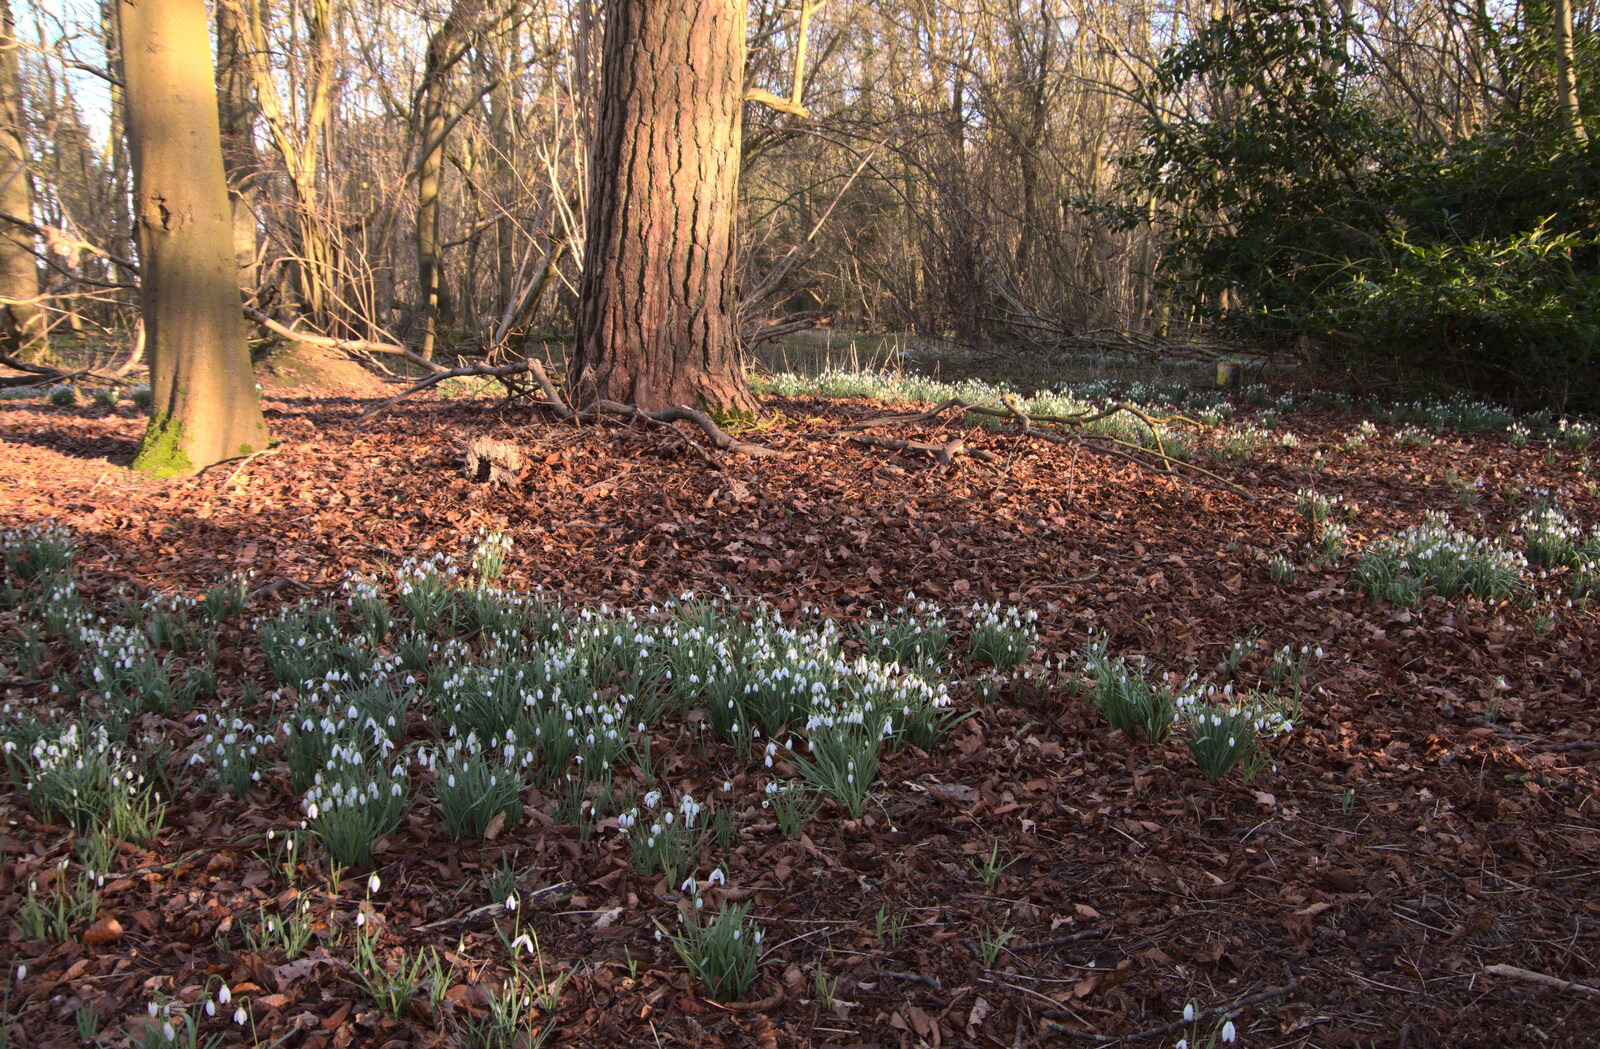 Winter woods from Snowdrops at Talconeston Hall, Tacolneston, Norfolk - 7th February 2020